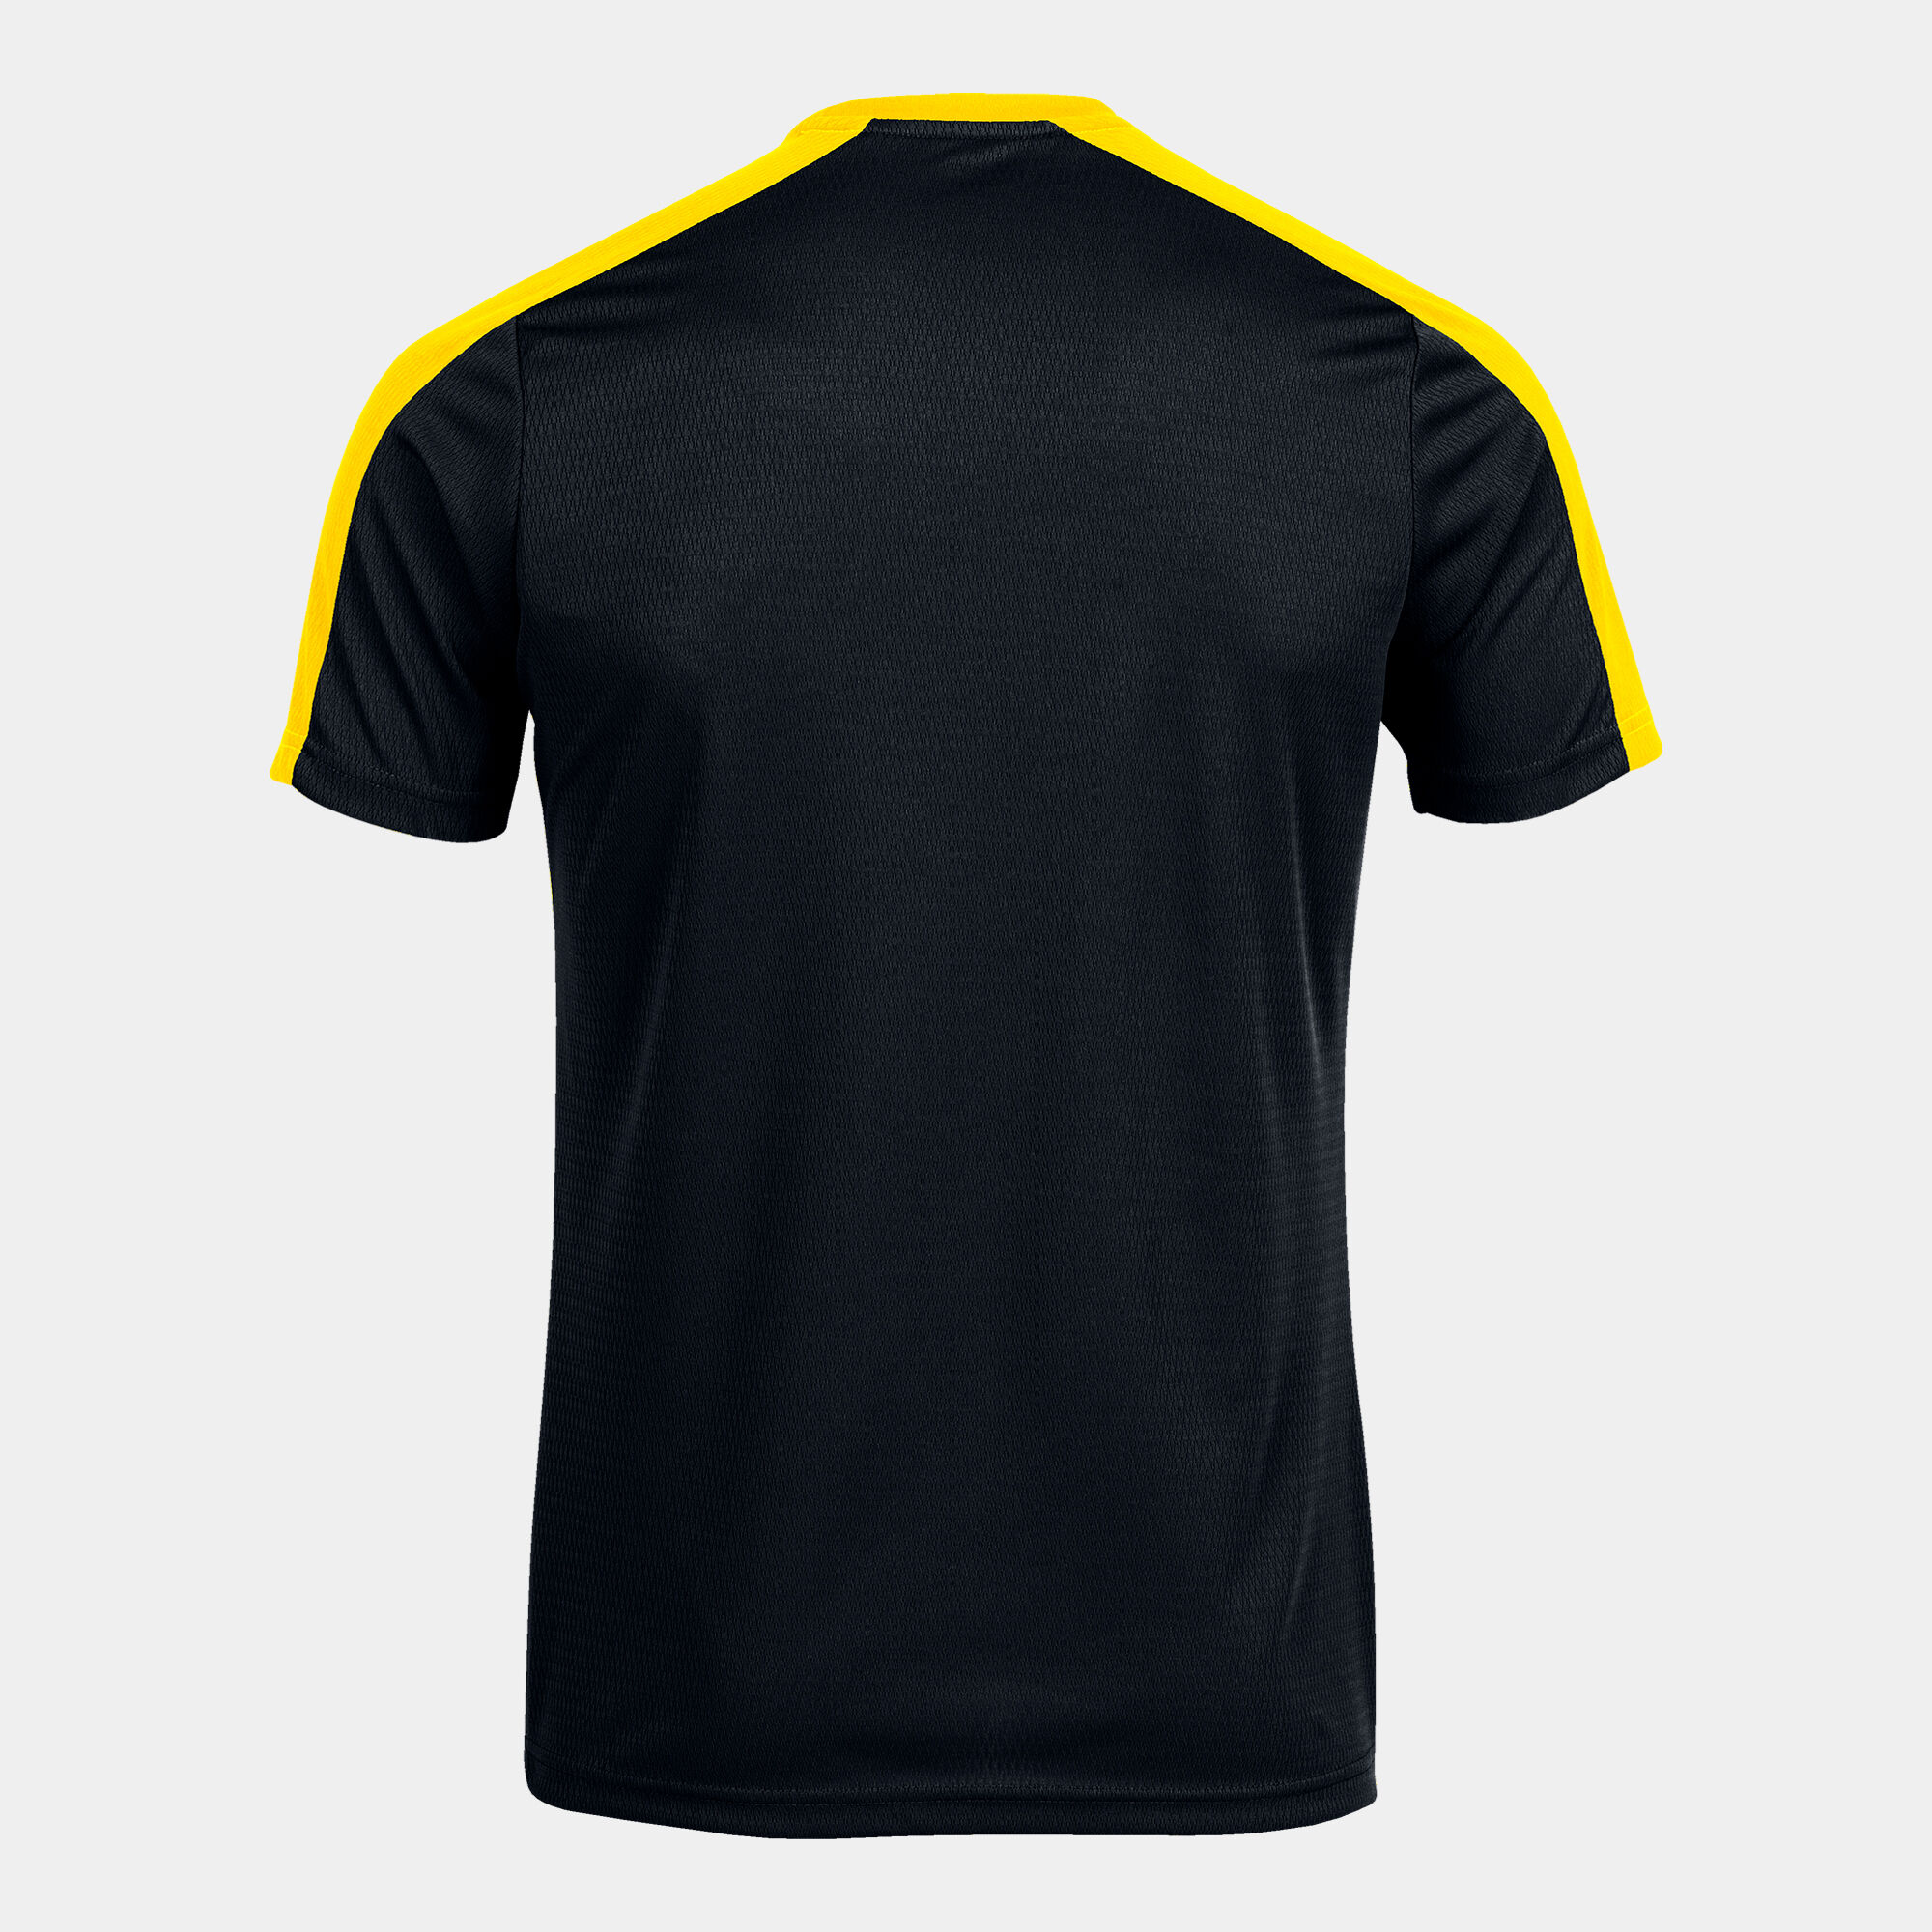 Camiseta manga corta hombre Eco Championship negro amarillo